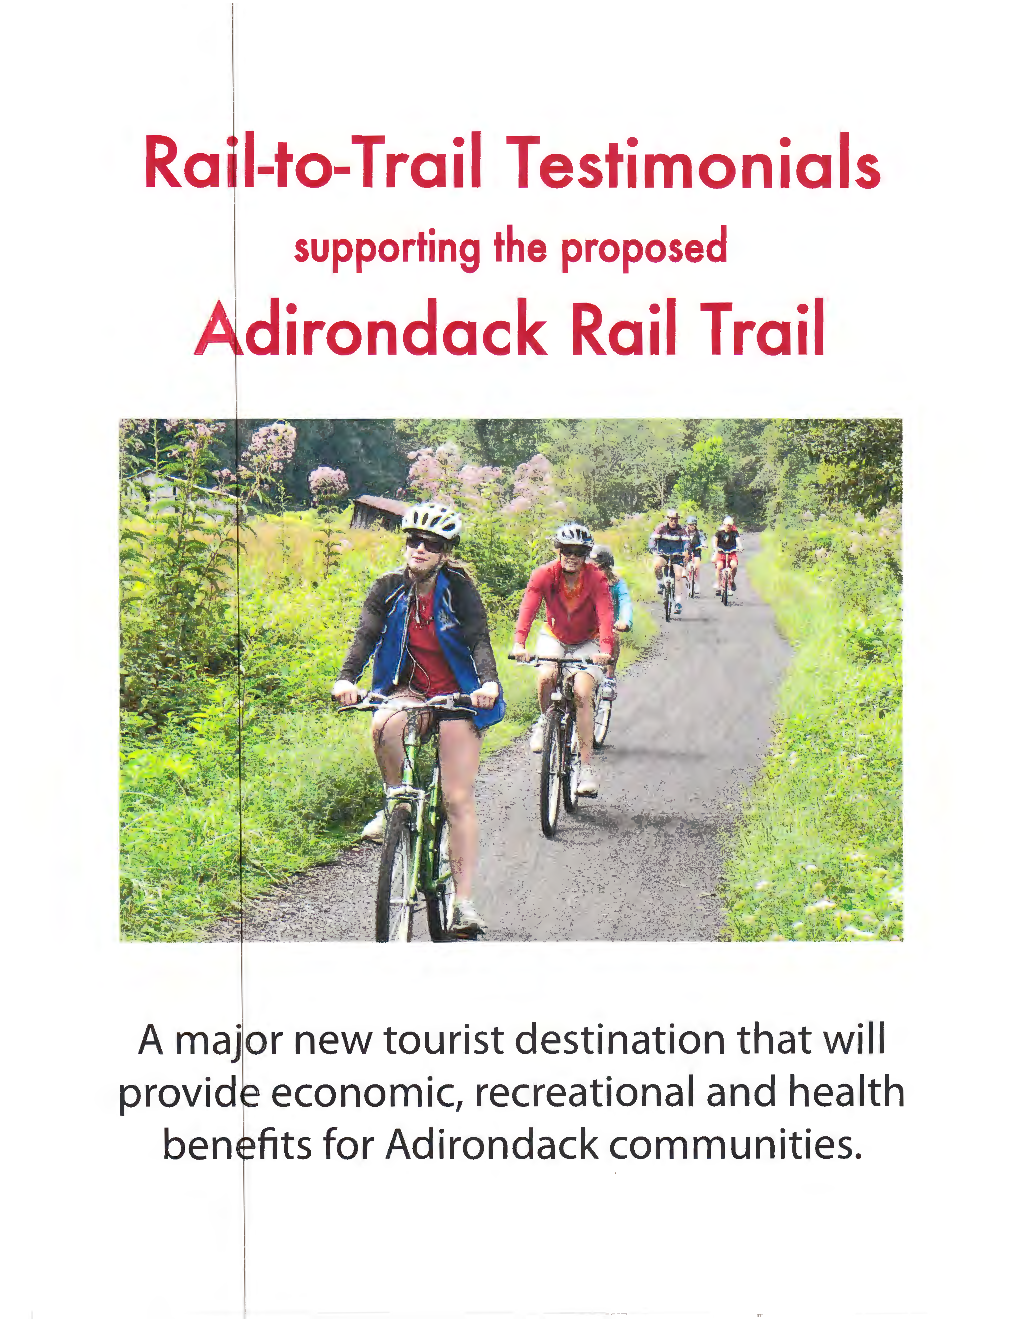 Ra I-To-Trail Testimonials . Dirondack Rail Trail